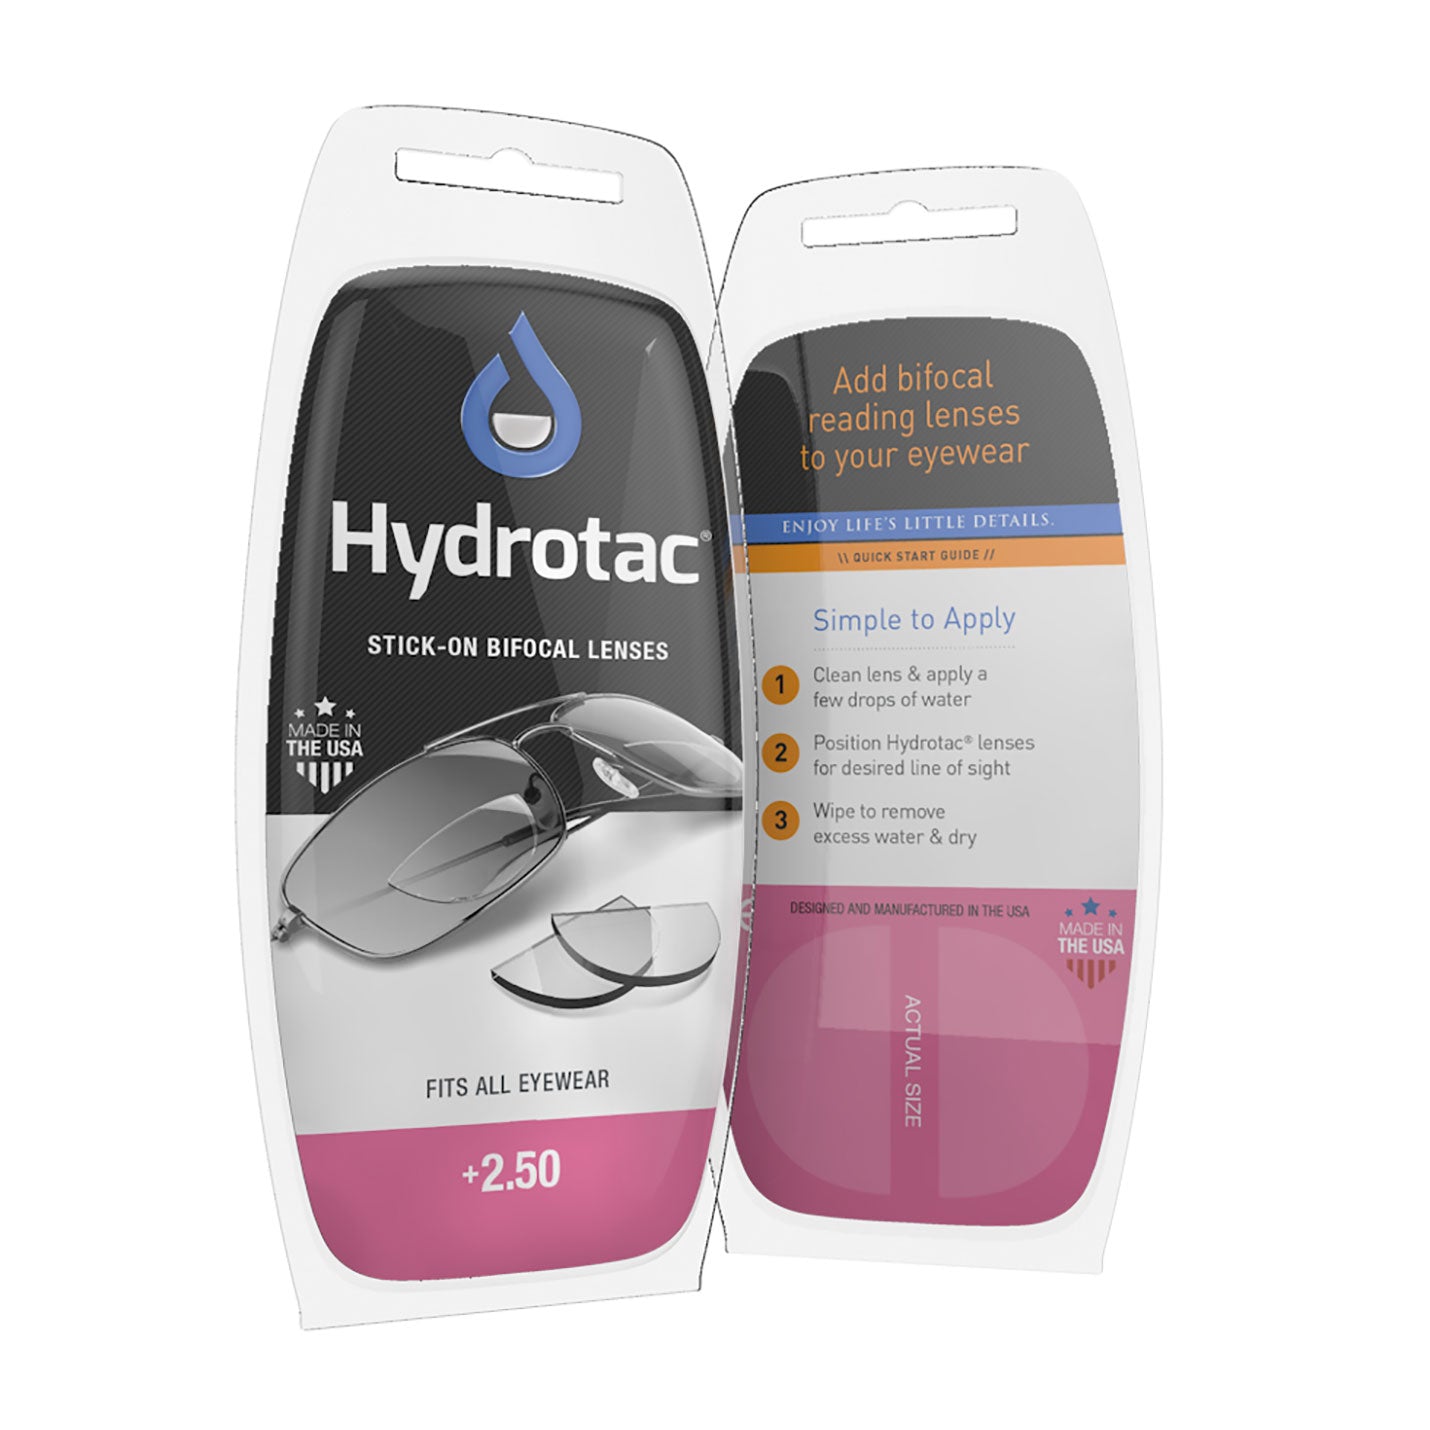 Hydrotac Stick-On Bifocal Lenses